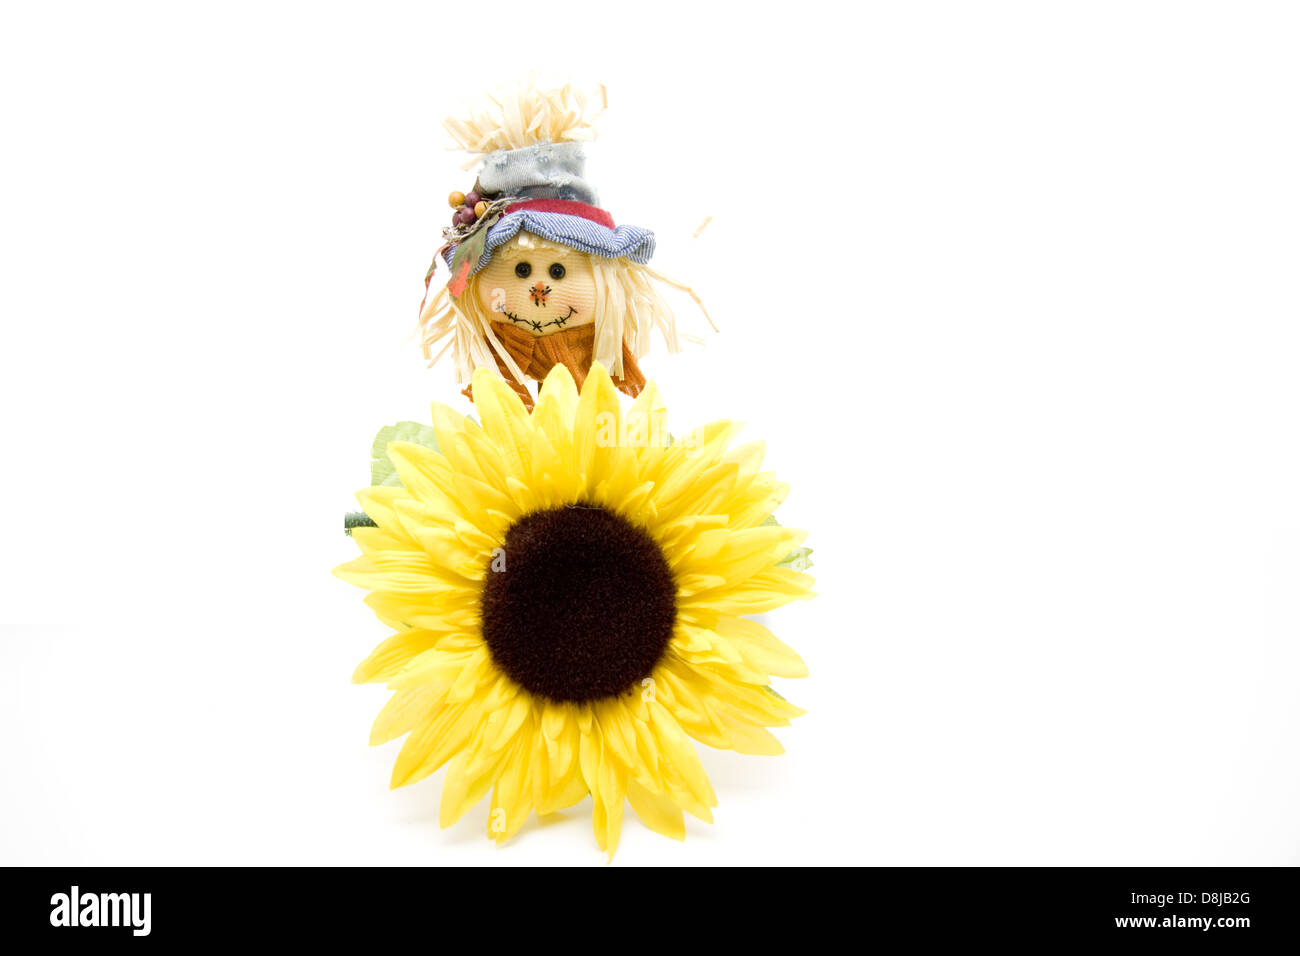 https://c8.alamy.com/comp/D8JB2G/straw-doll-with-sunflower-D8JB2G.jpg